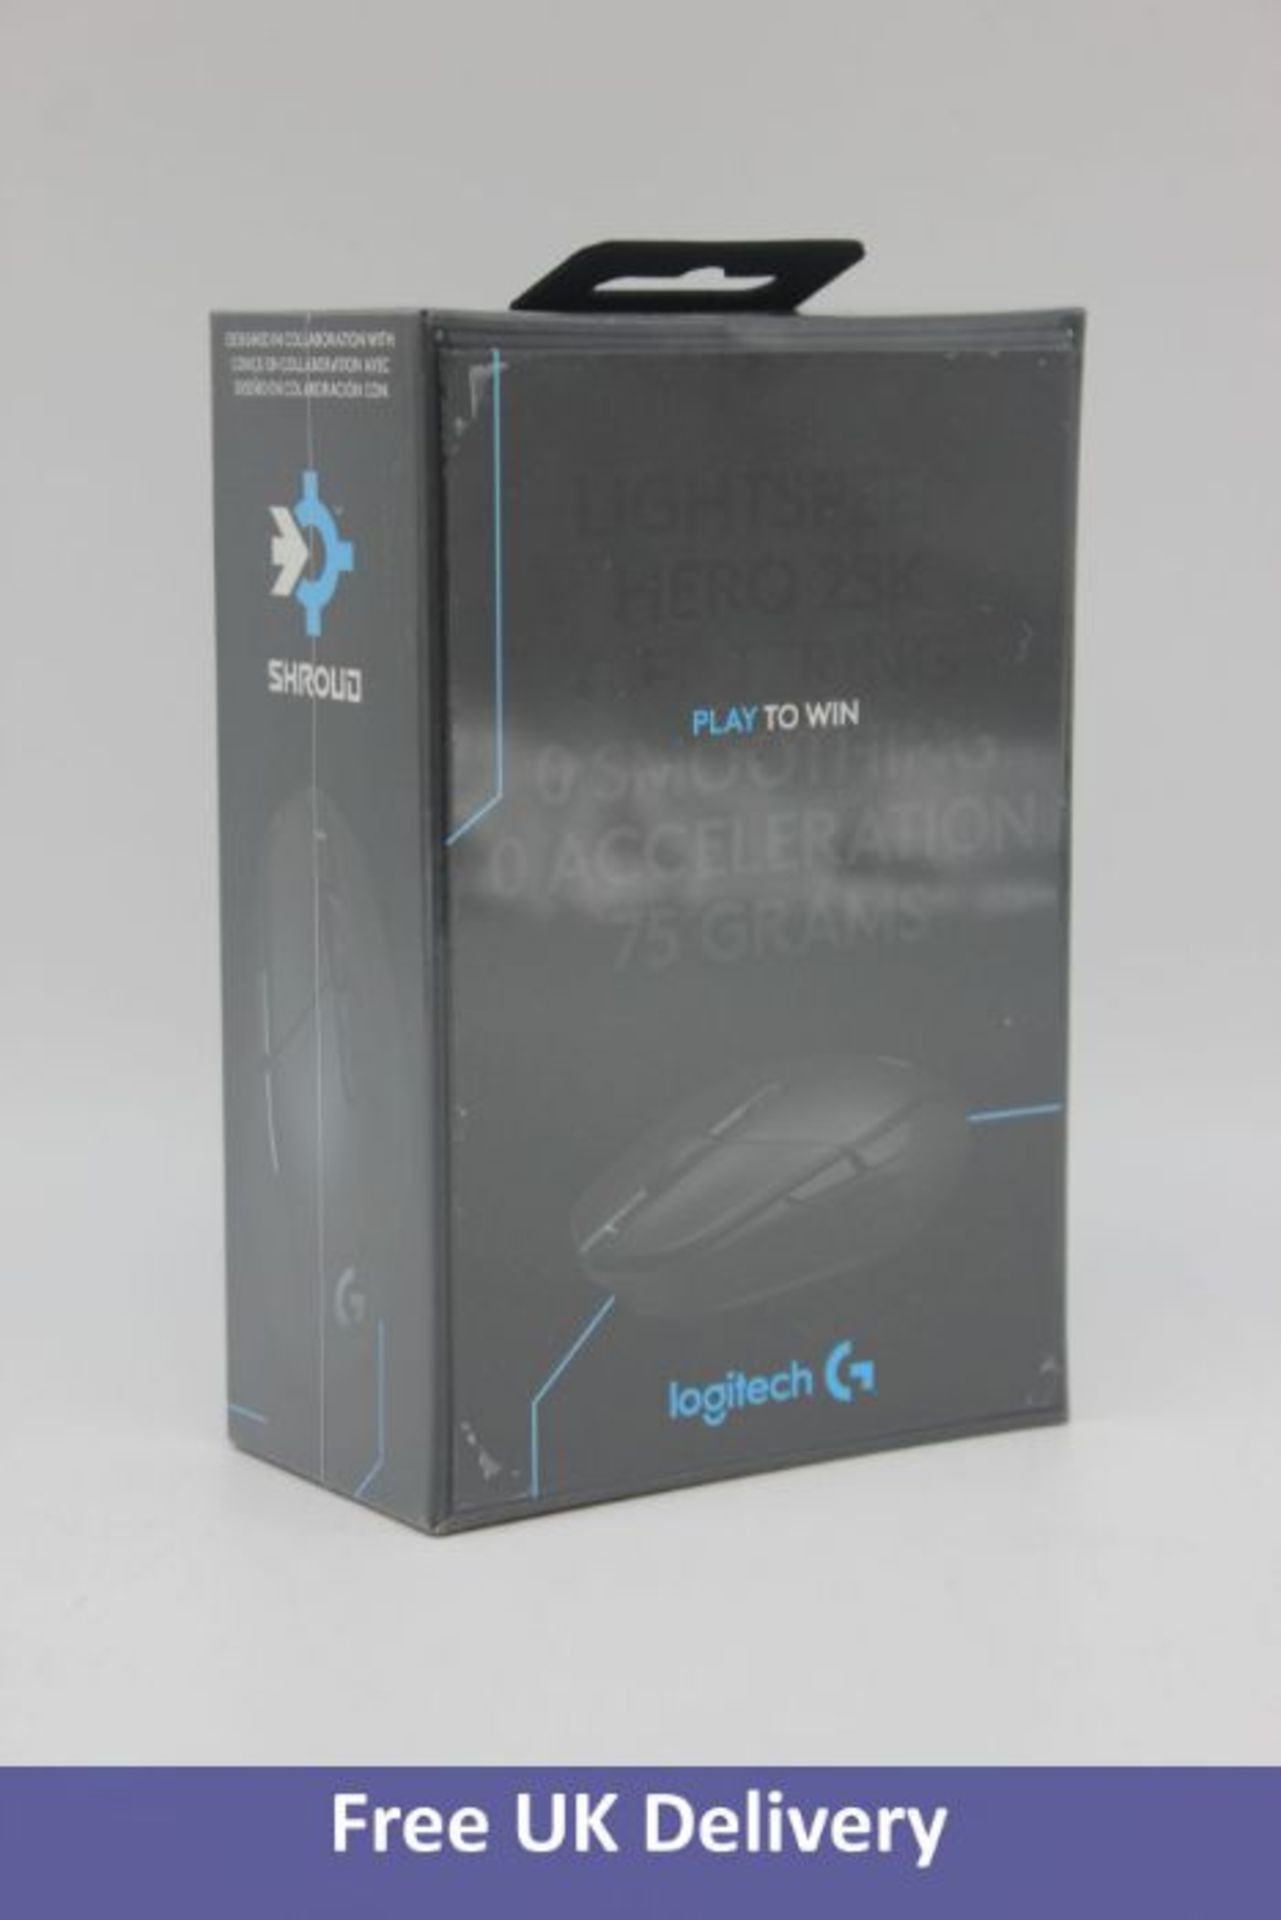 Logitech G303 Shroud Edition Wireless Gaming Mouse, Black